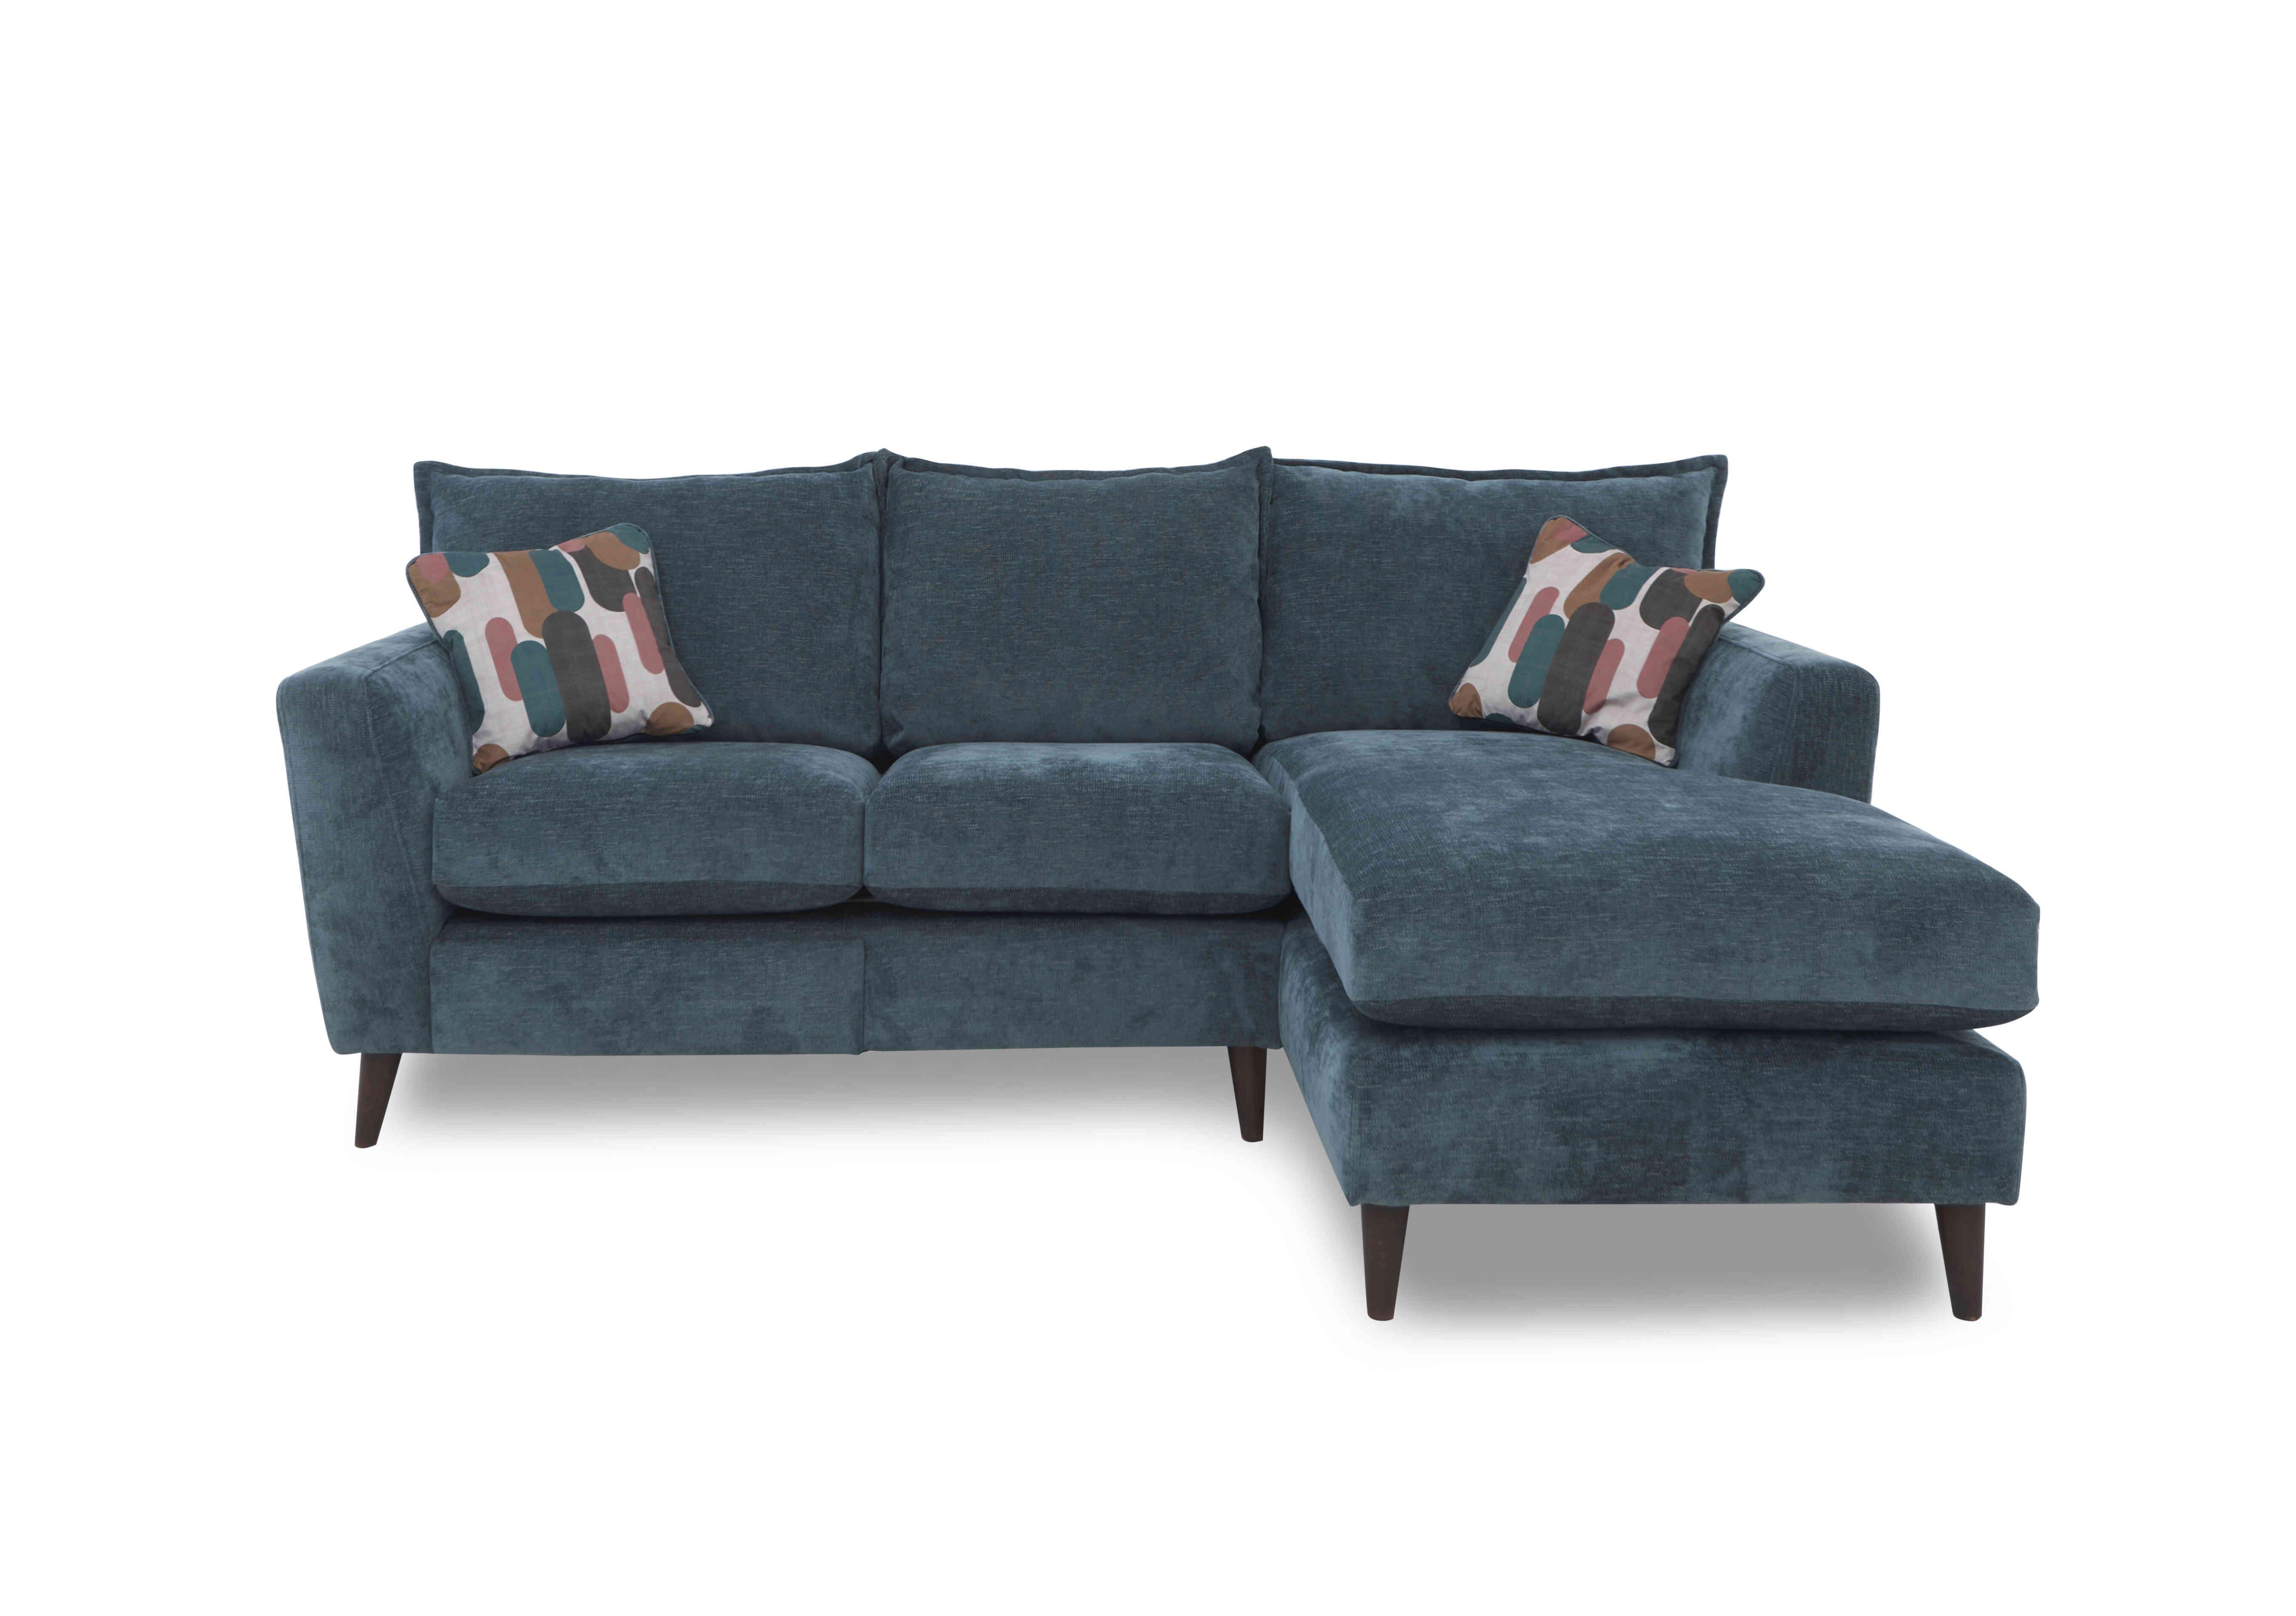 Sofia Fabric Corner Sofa with Chaise End in Marlon Atlantic Wf on Furniture Village